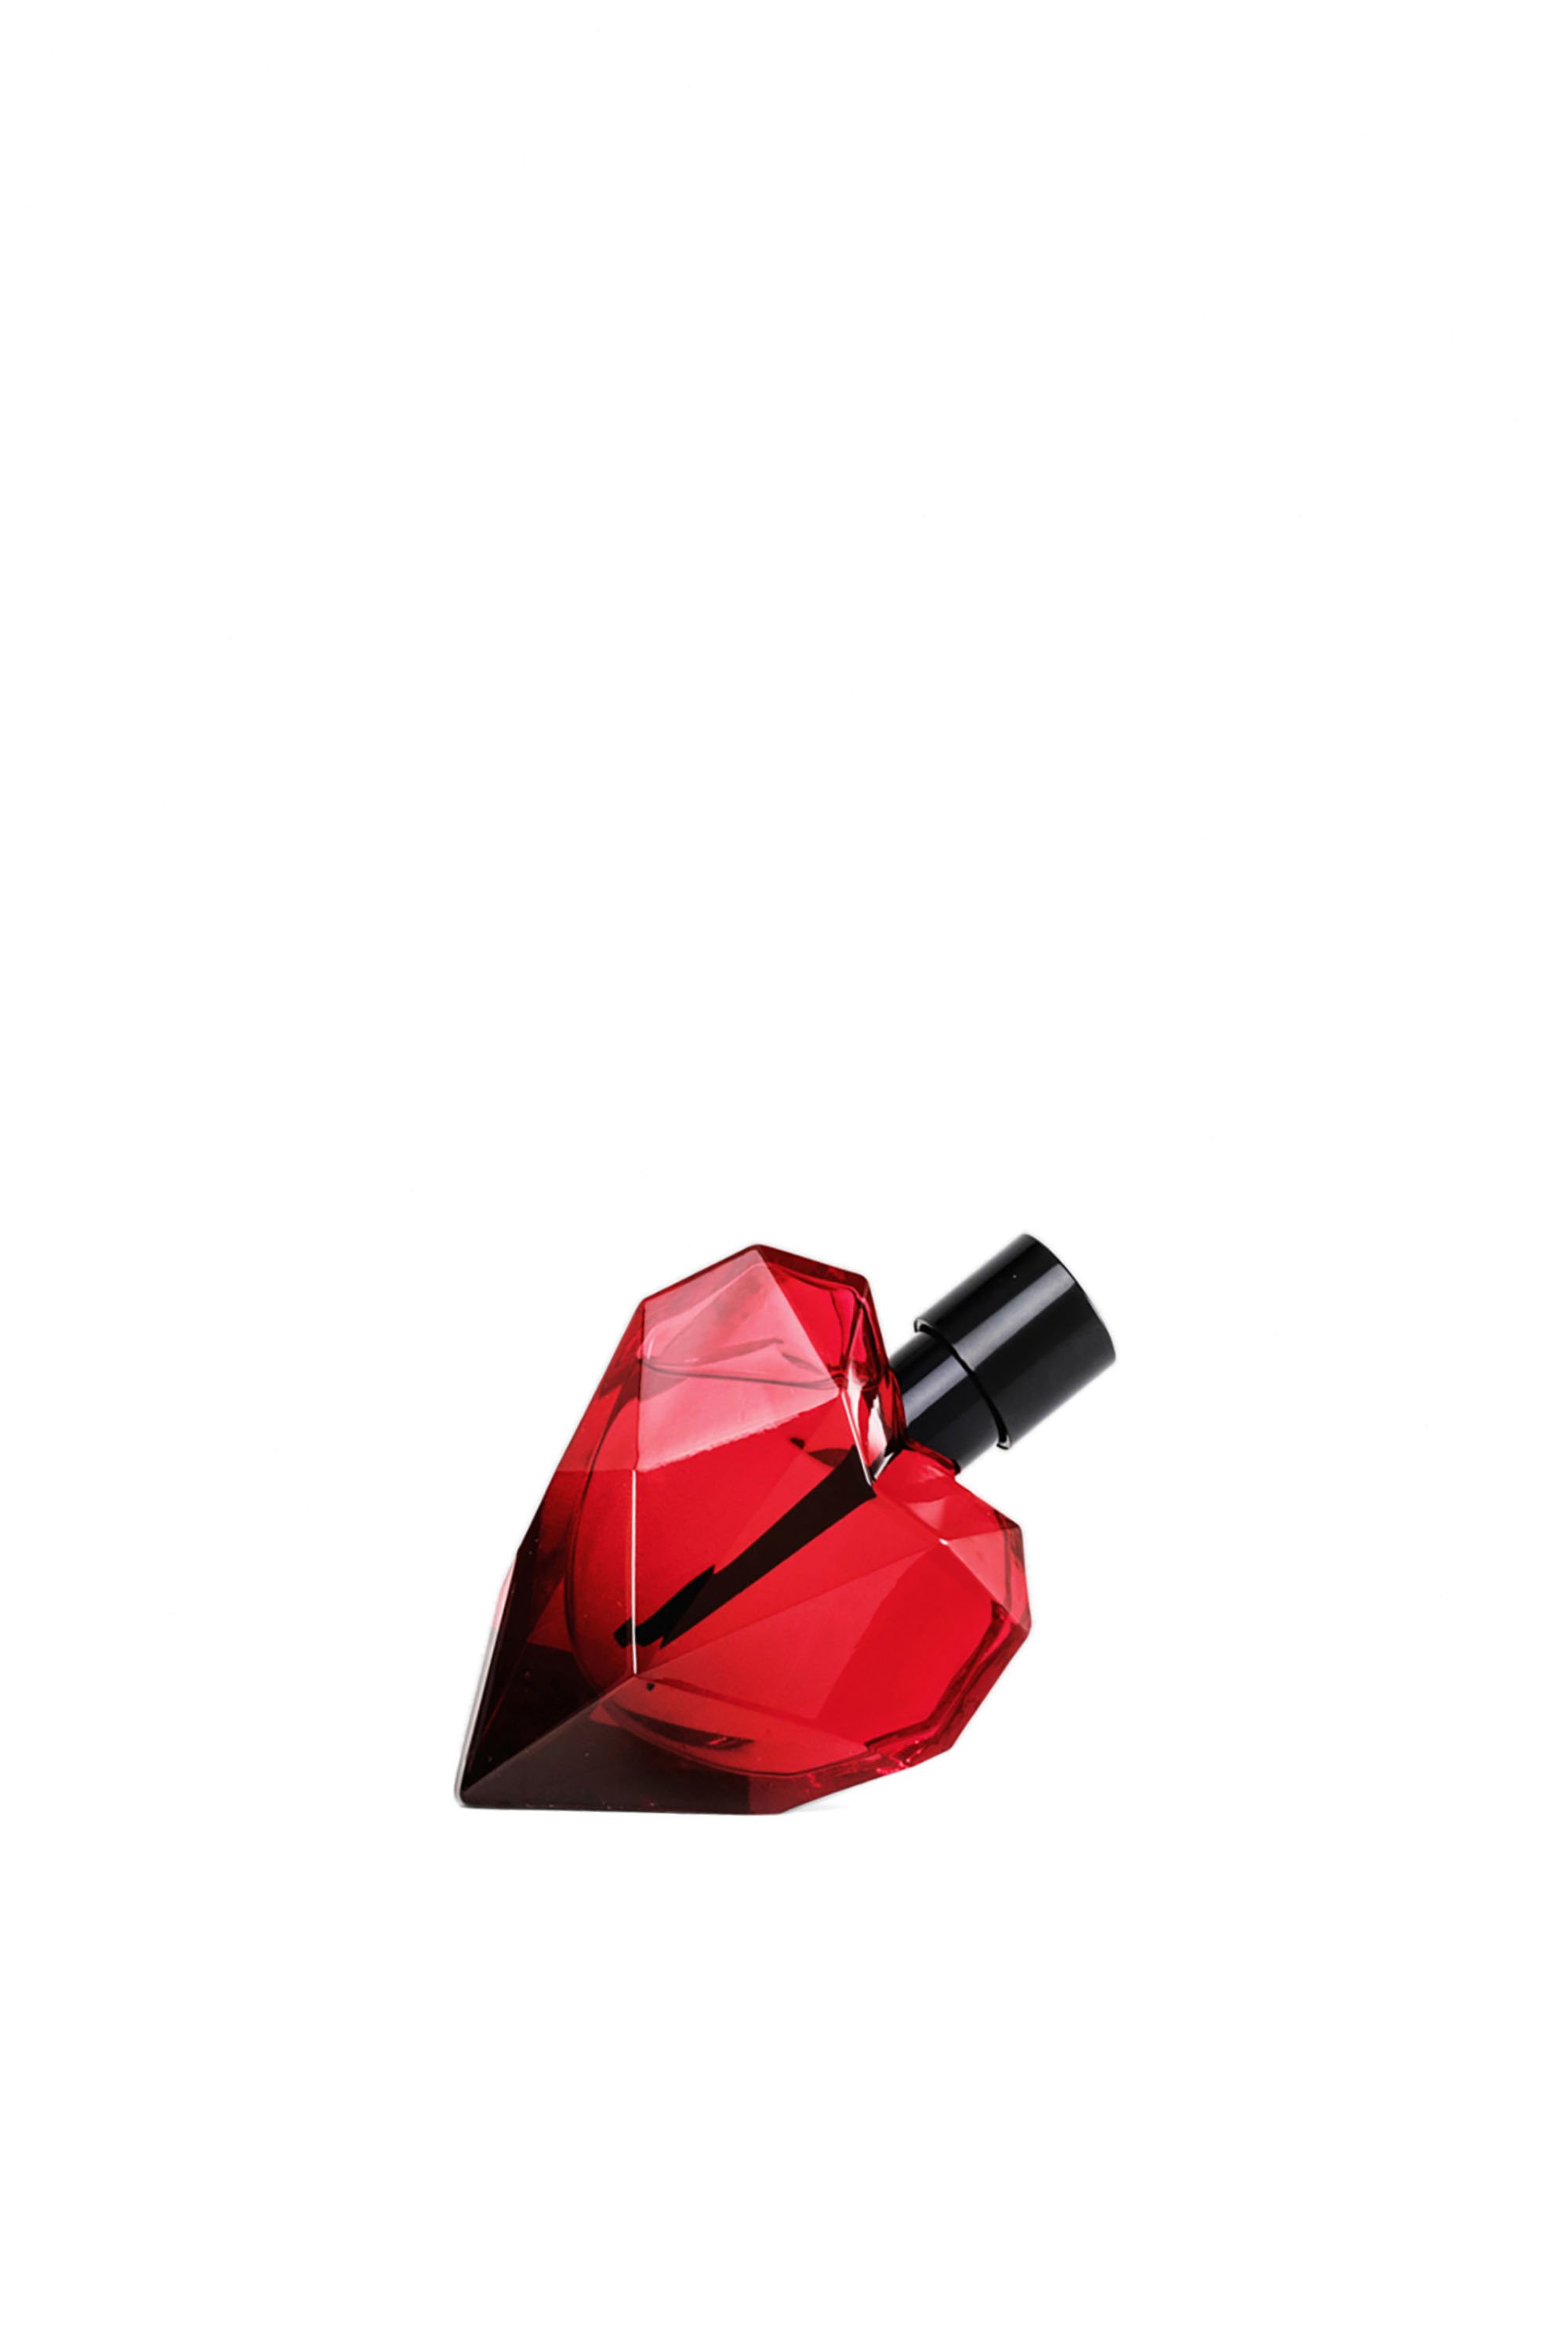 Diesel - LOVERDOSE RED KISS EAU DE PARFUM 50ML, Woman Loverdose red kiss 50ml, eau de parfum in Red - Image 1